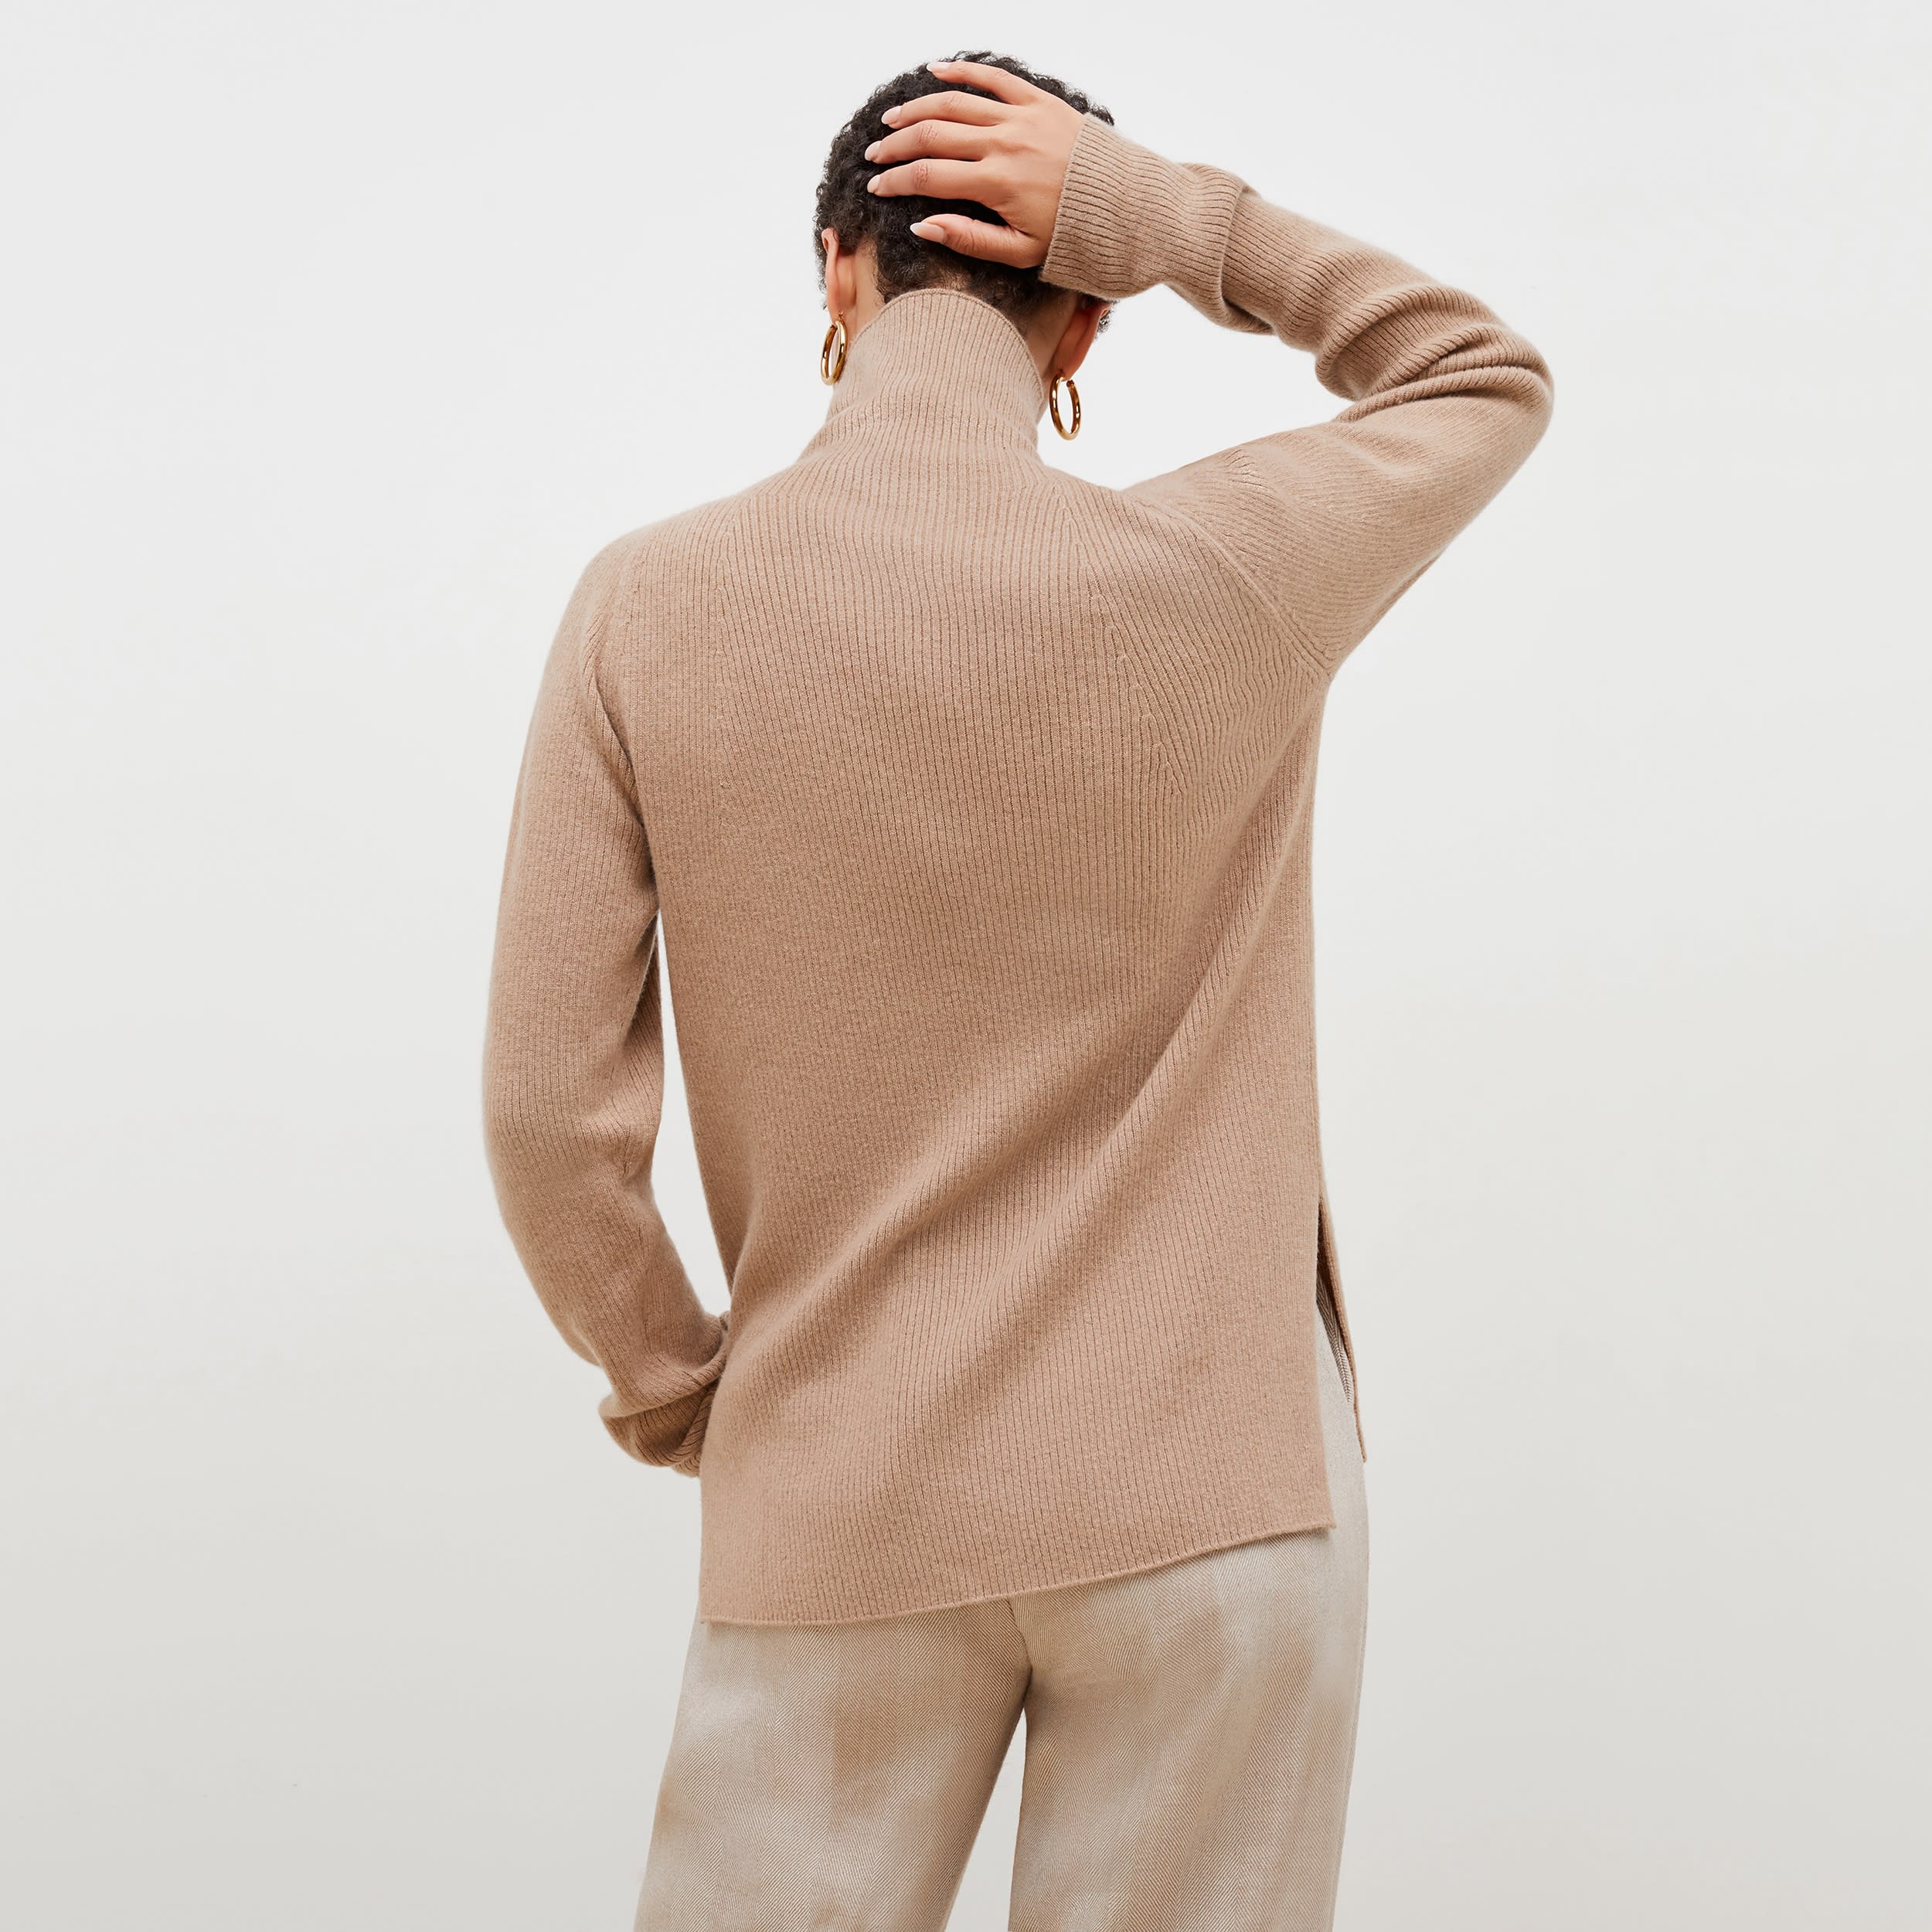 The McKenzie Sweater—Cashmere - Deep Flax | M.M.LaFleur